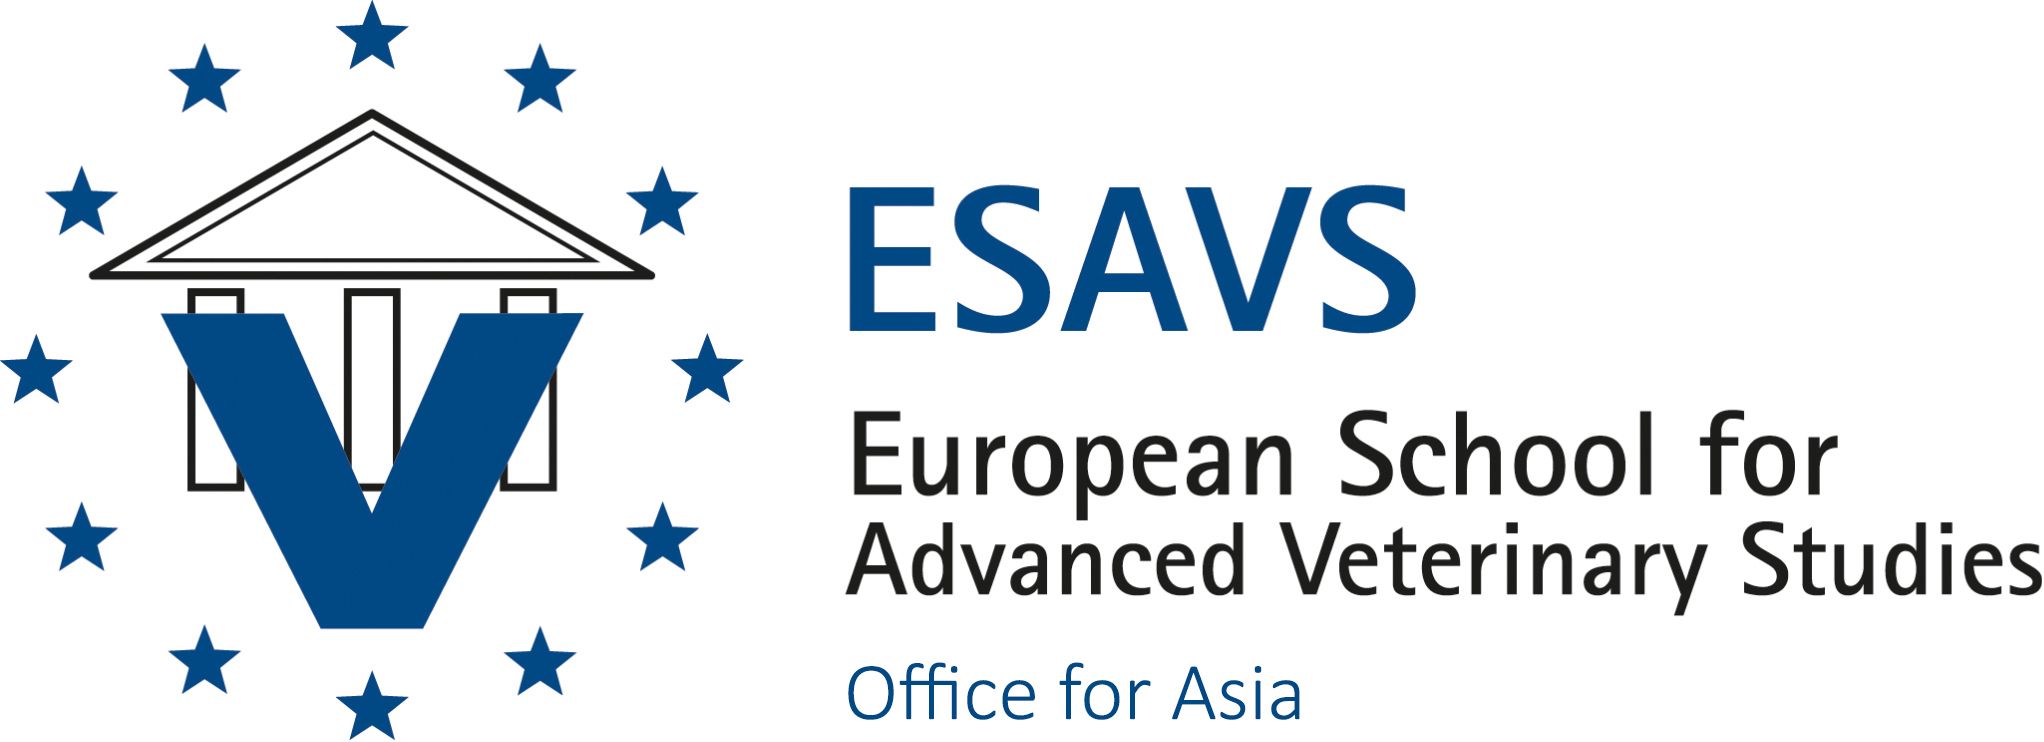 ESAVS - European School for Advanced Veterinary Studies